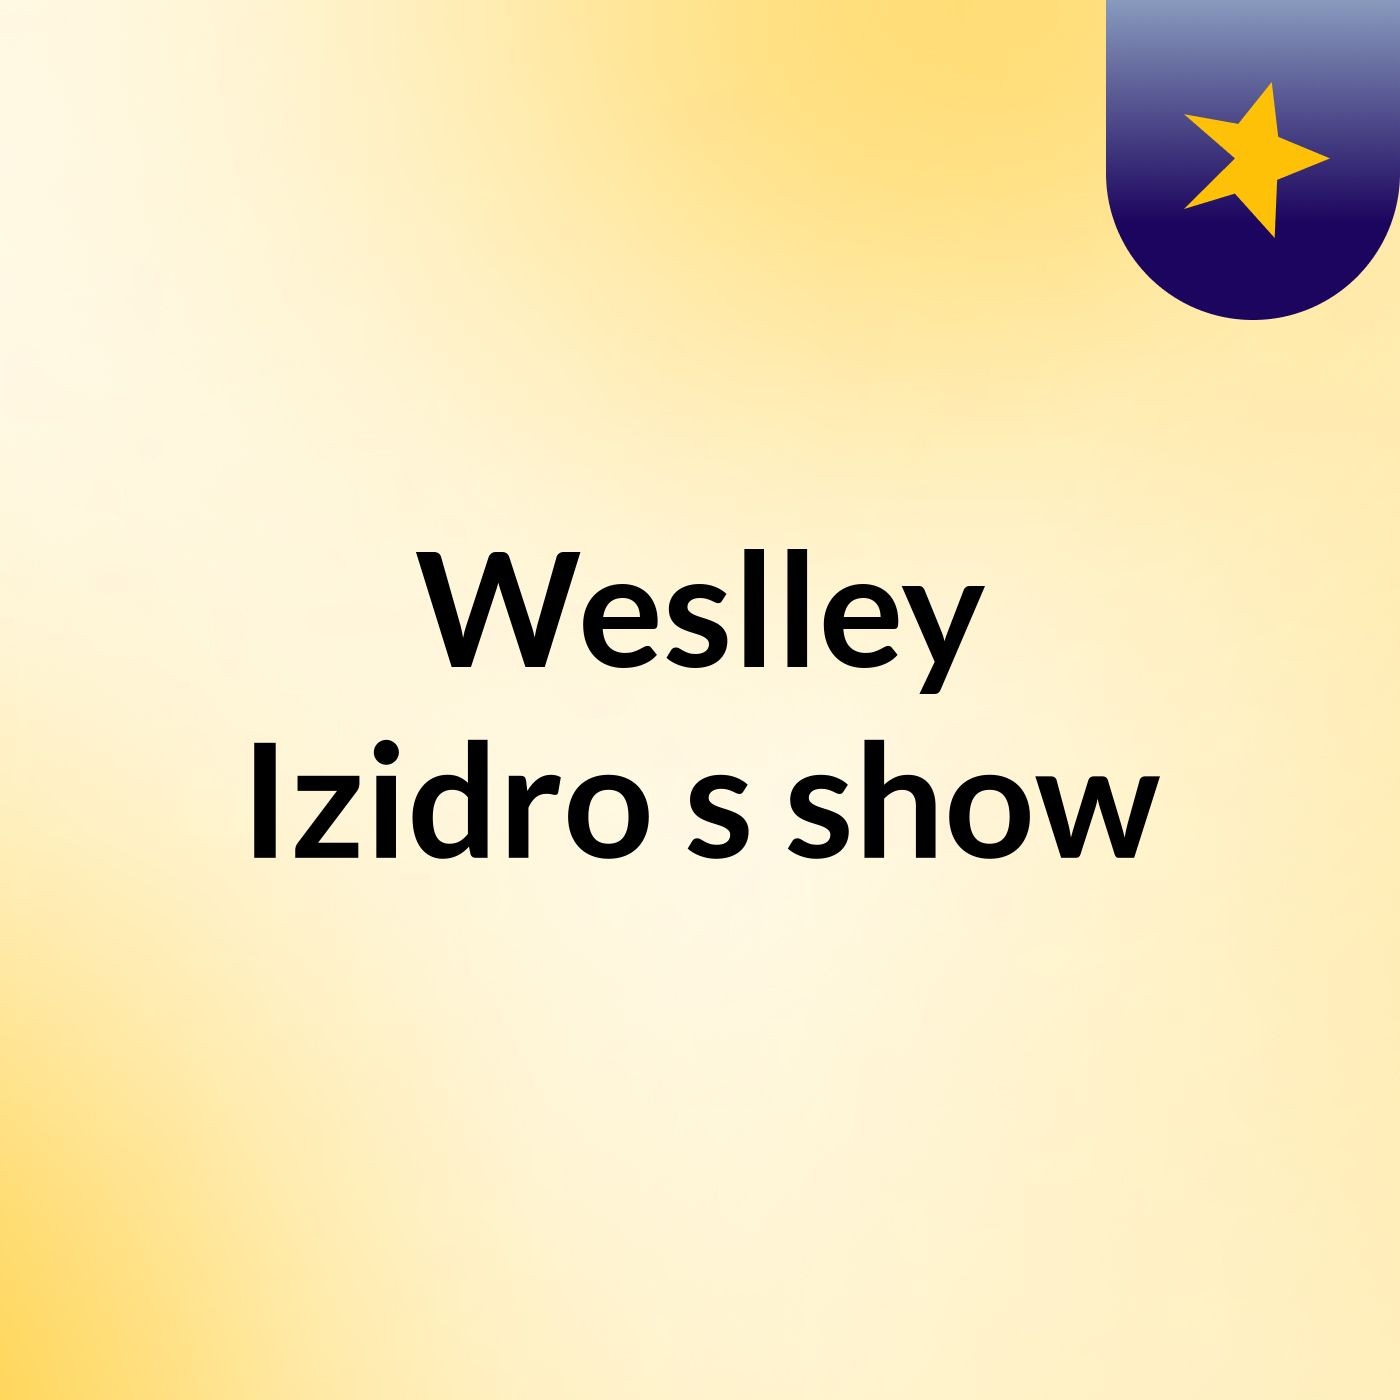 Weslley Izidro's show